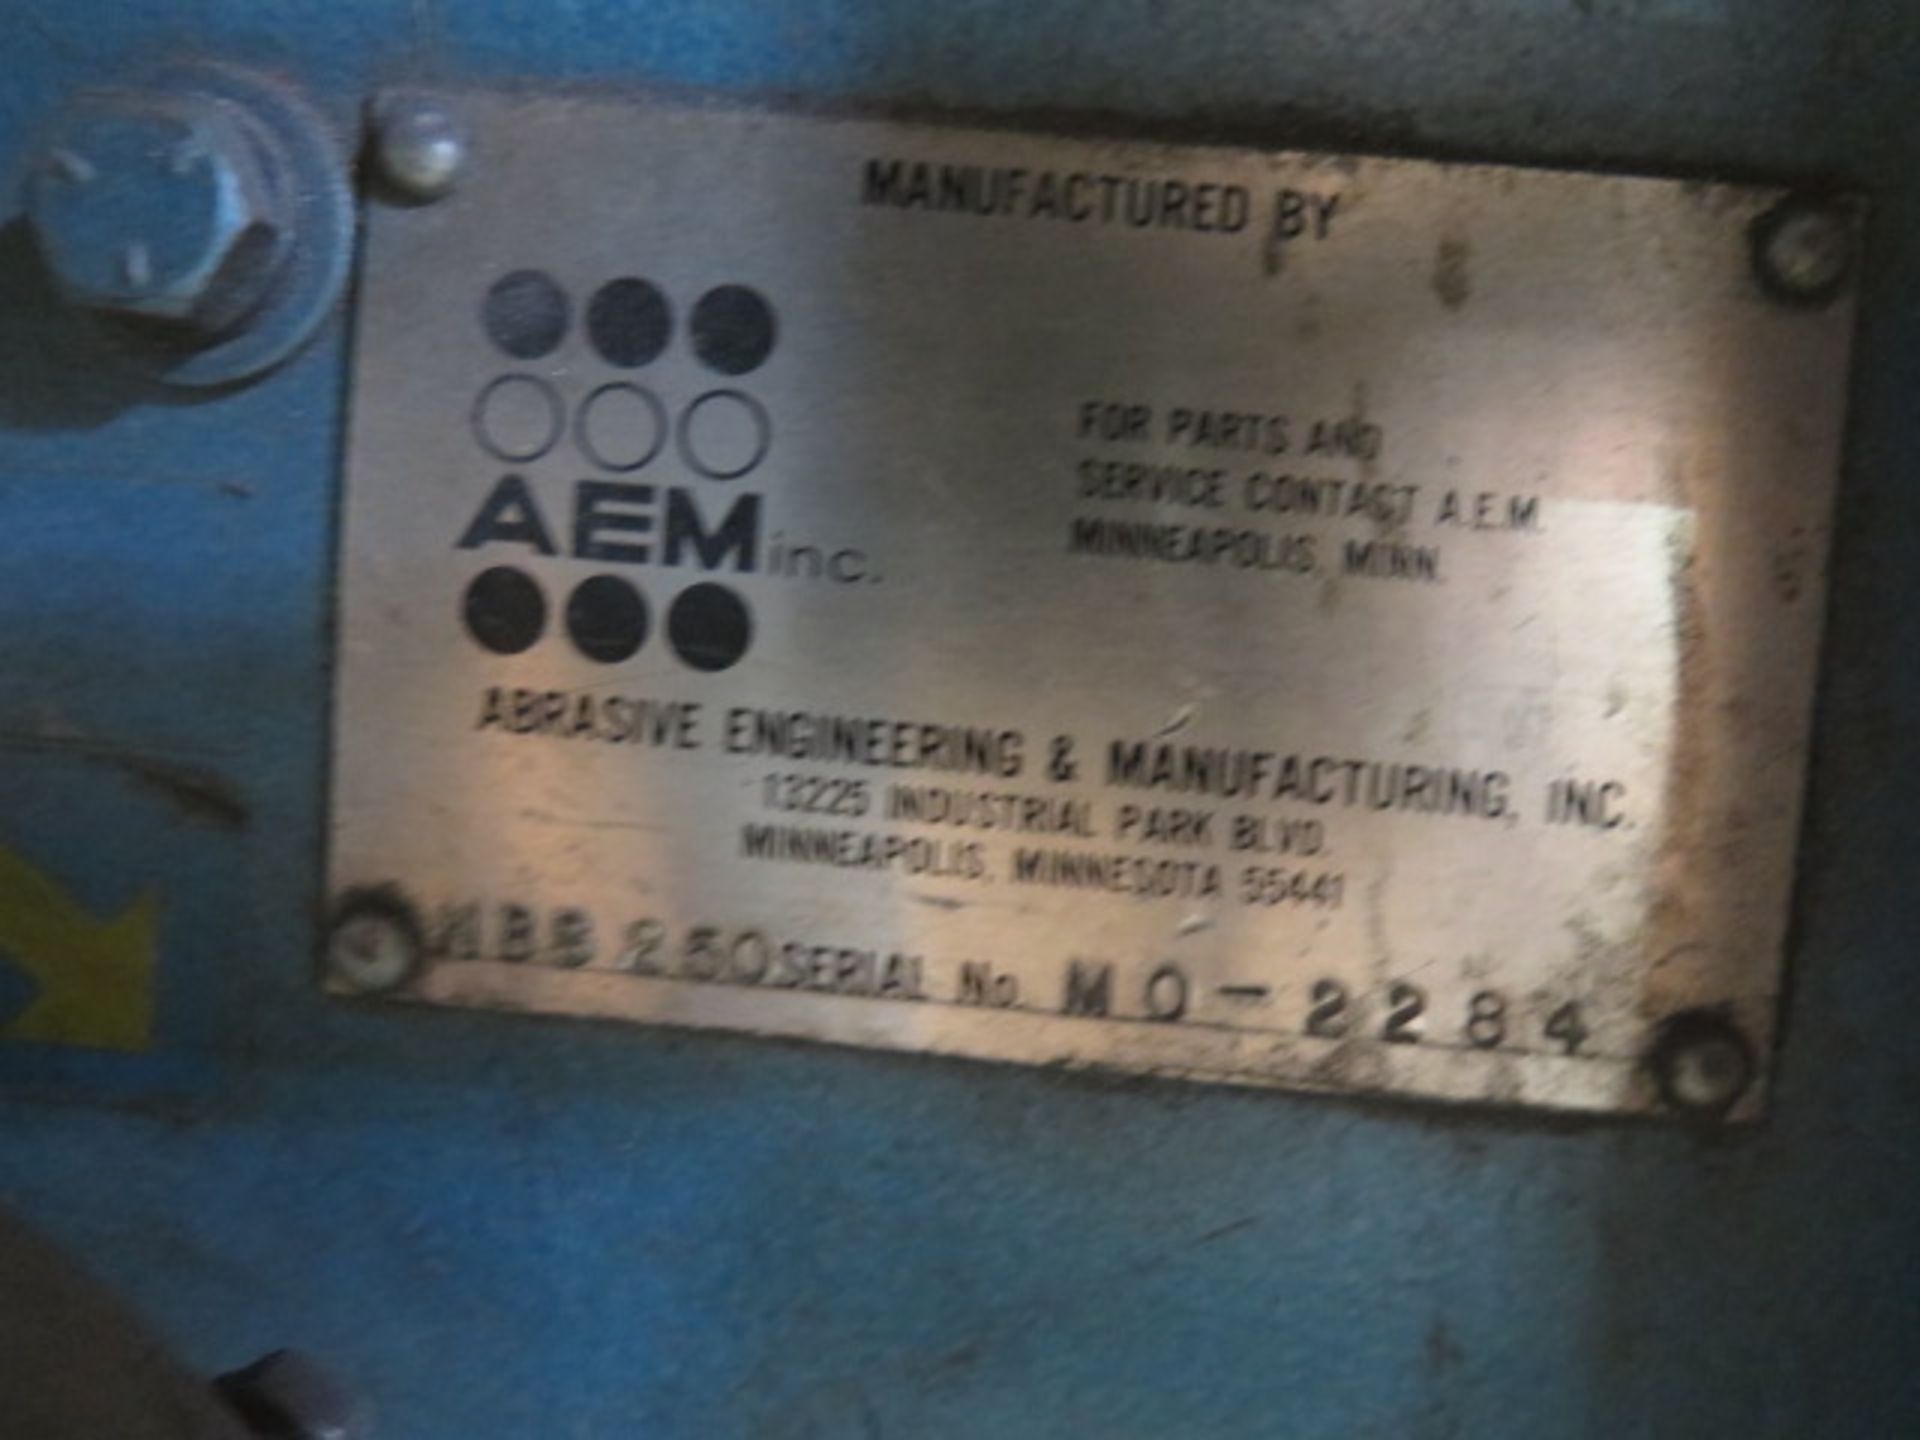 AEM Narrowbelt NBS250 24” Belt Grainer s/n MO-2284 (SOLD AS-IS - NO WARRANTY) - Image 9 of 9